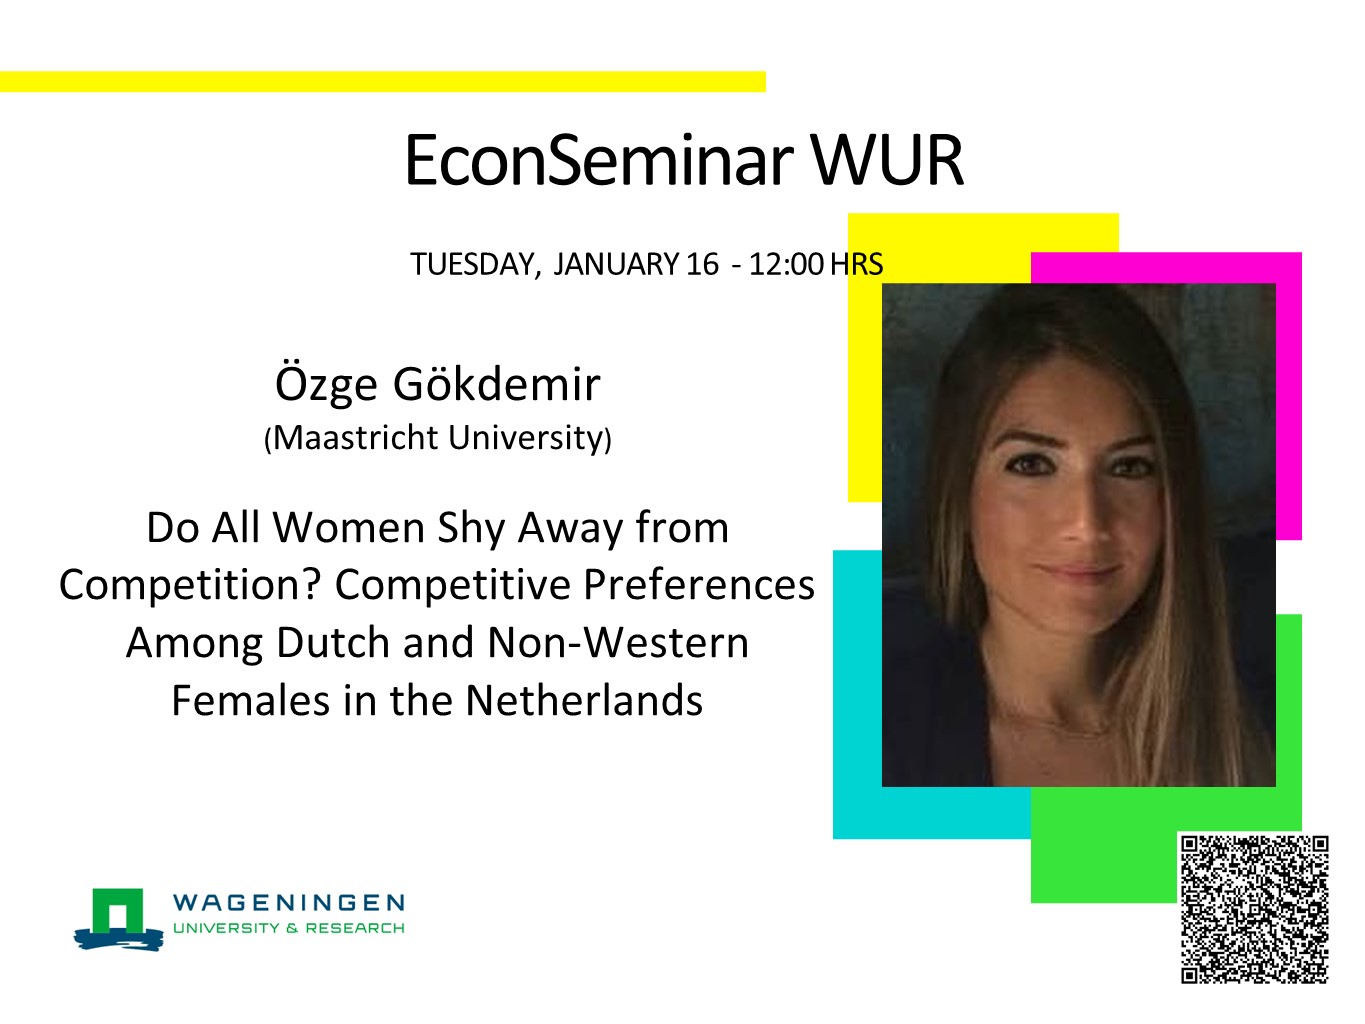 Özge Gökdemir(Maastricht University): “Do All Women Shy Away from